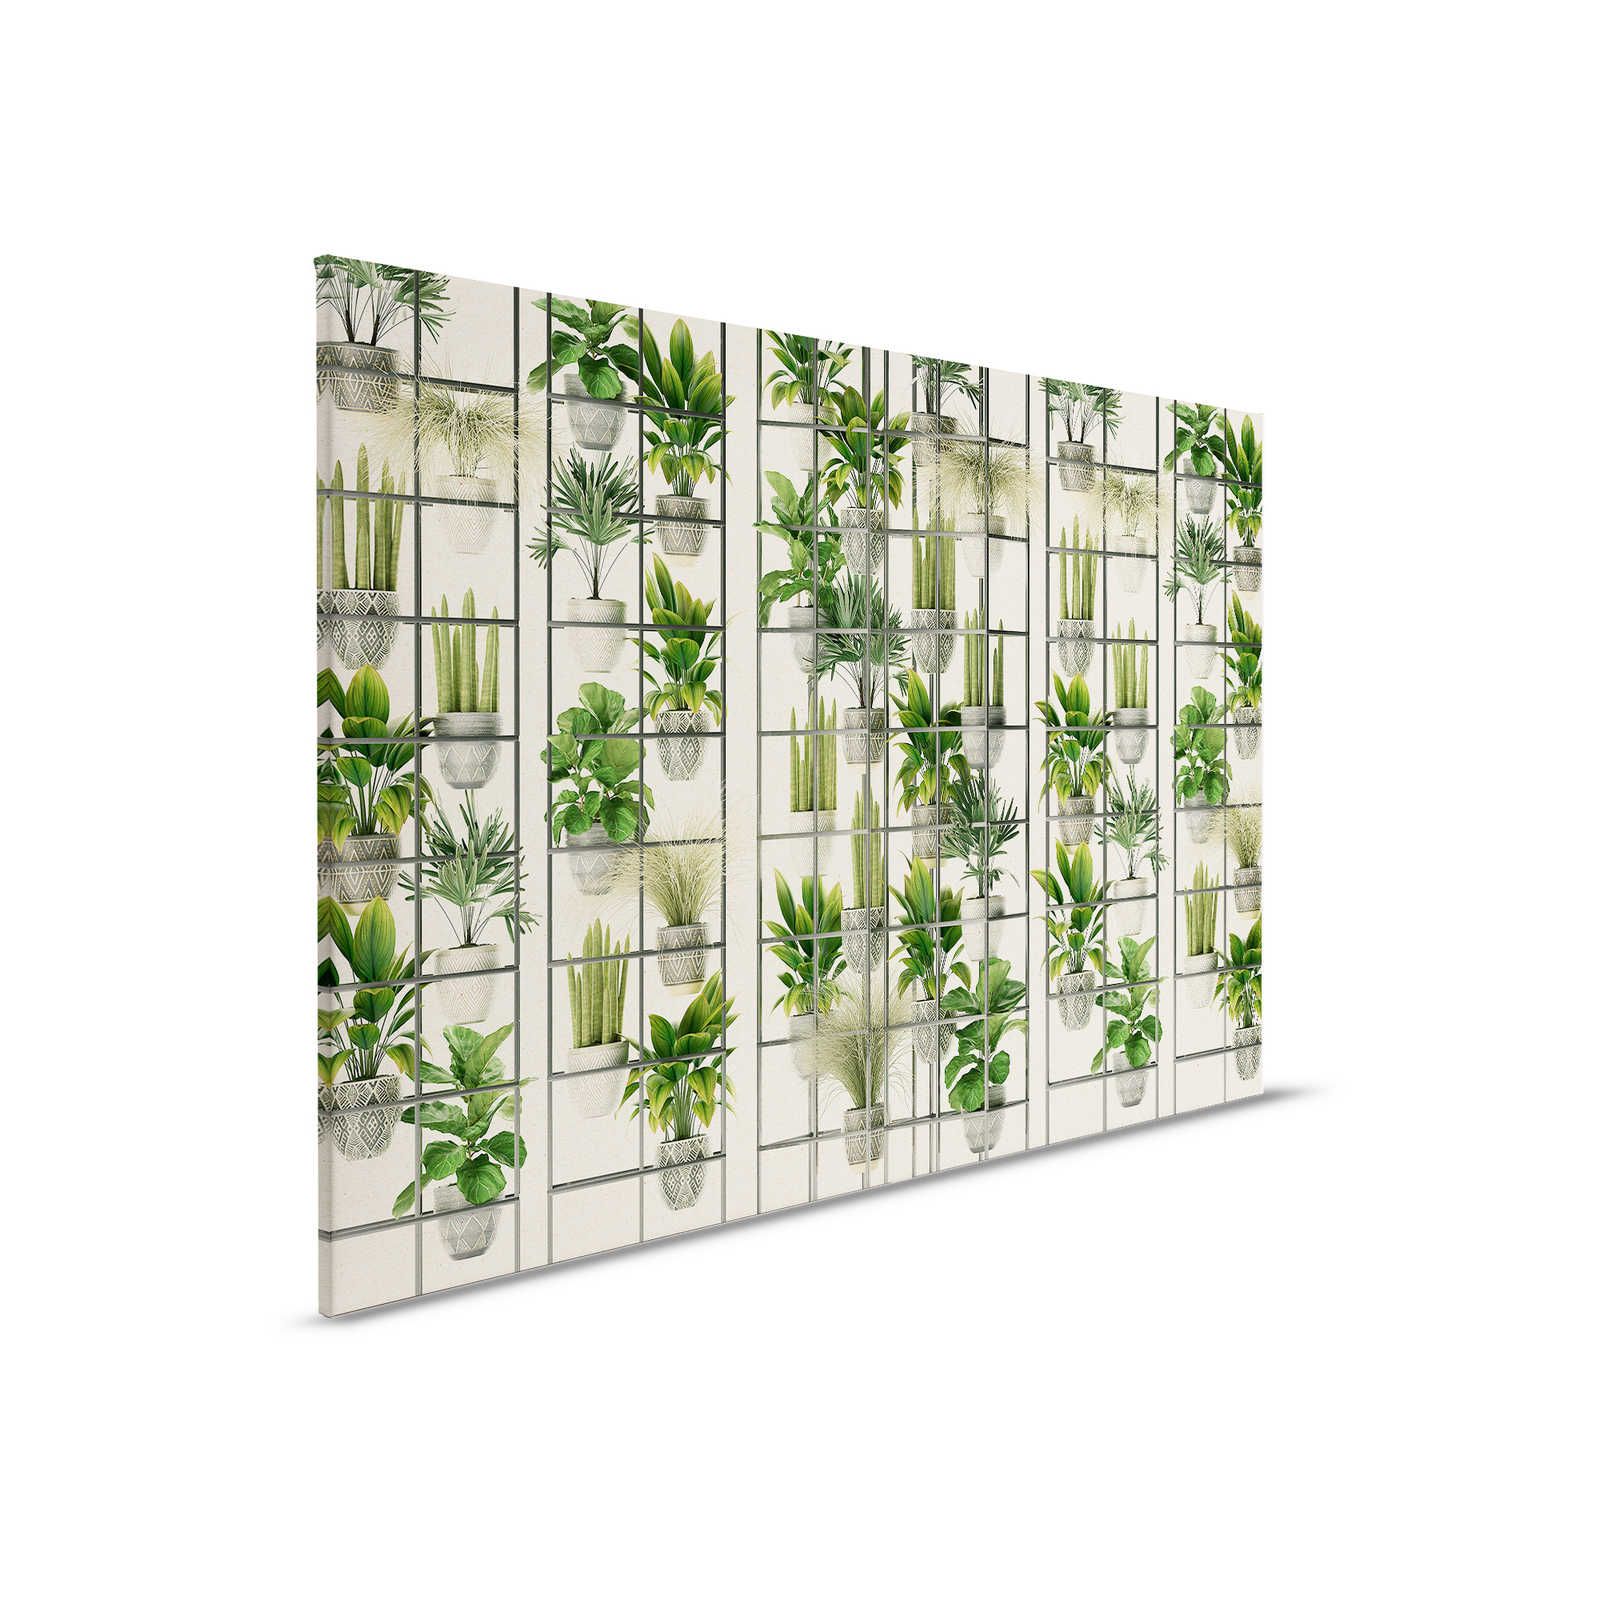 Plantenwinkel 2 - Canvas schilderij moderne plantenwand in groen & grijs - 0,90 m x 0,60 m
